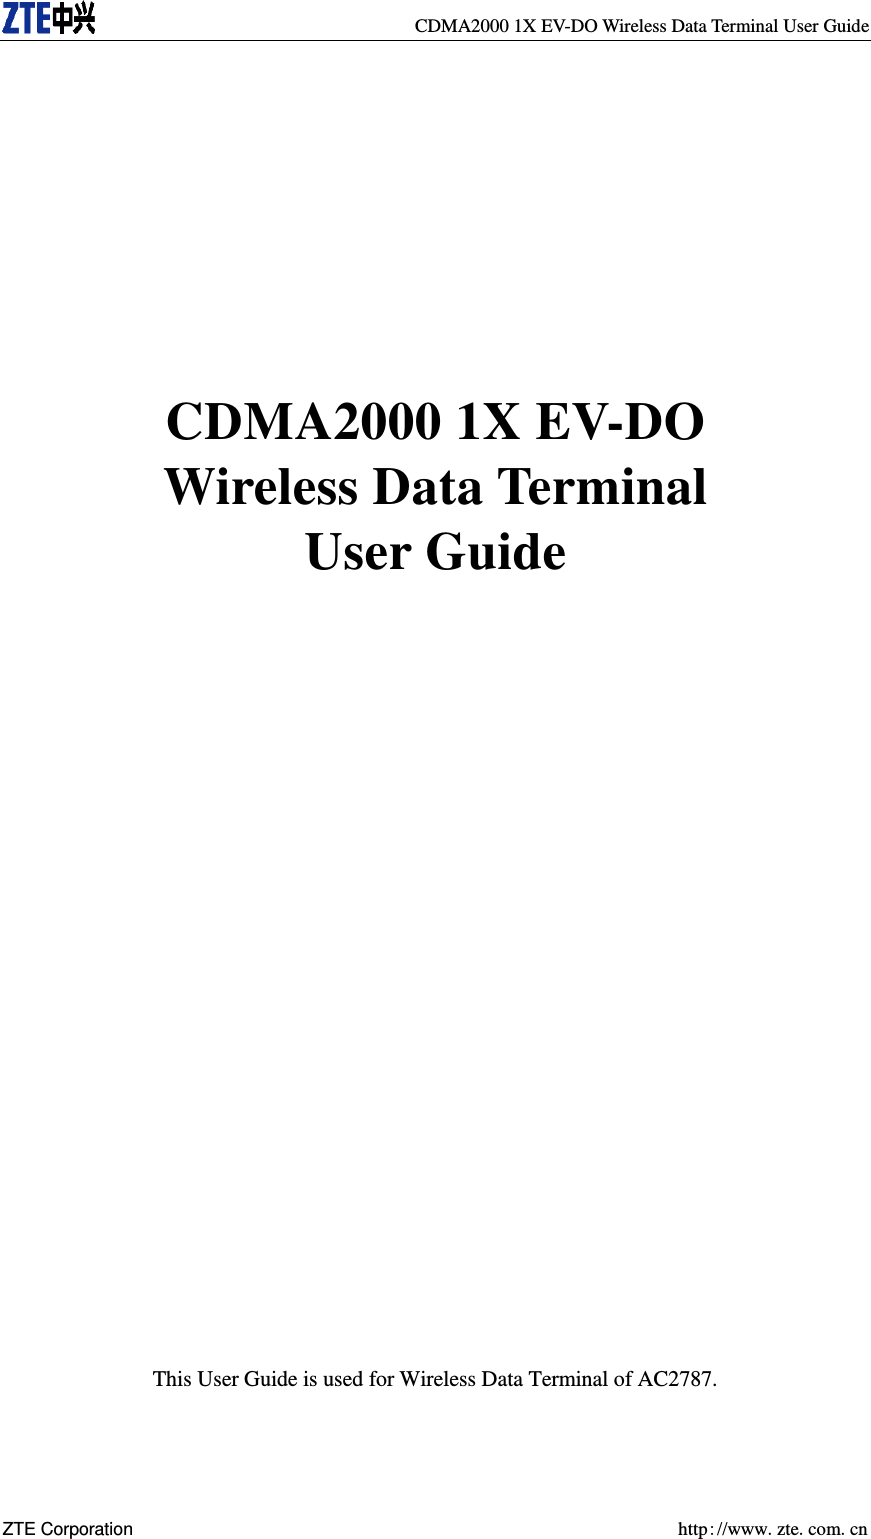   CDMA2000 1X EV-DO Wireless Data Terminal User Guide ZTE Corporation    http://www.zte.com.cn        CDMA2000 1X EV-DO Wireless Data Terminal User Guide                         This User Guide is used for Wireless Data Terminal of AC2787. 